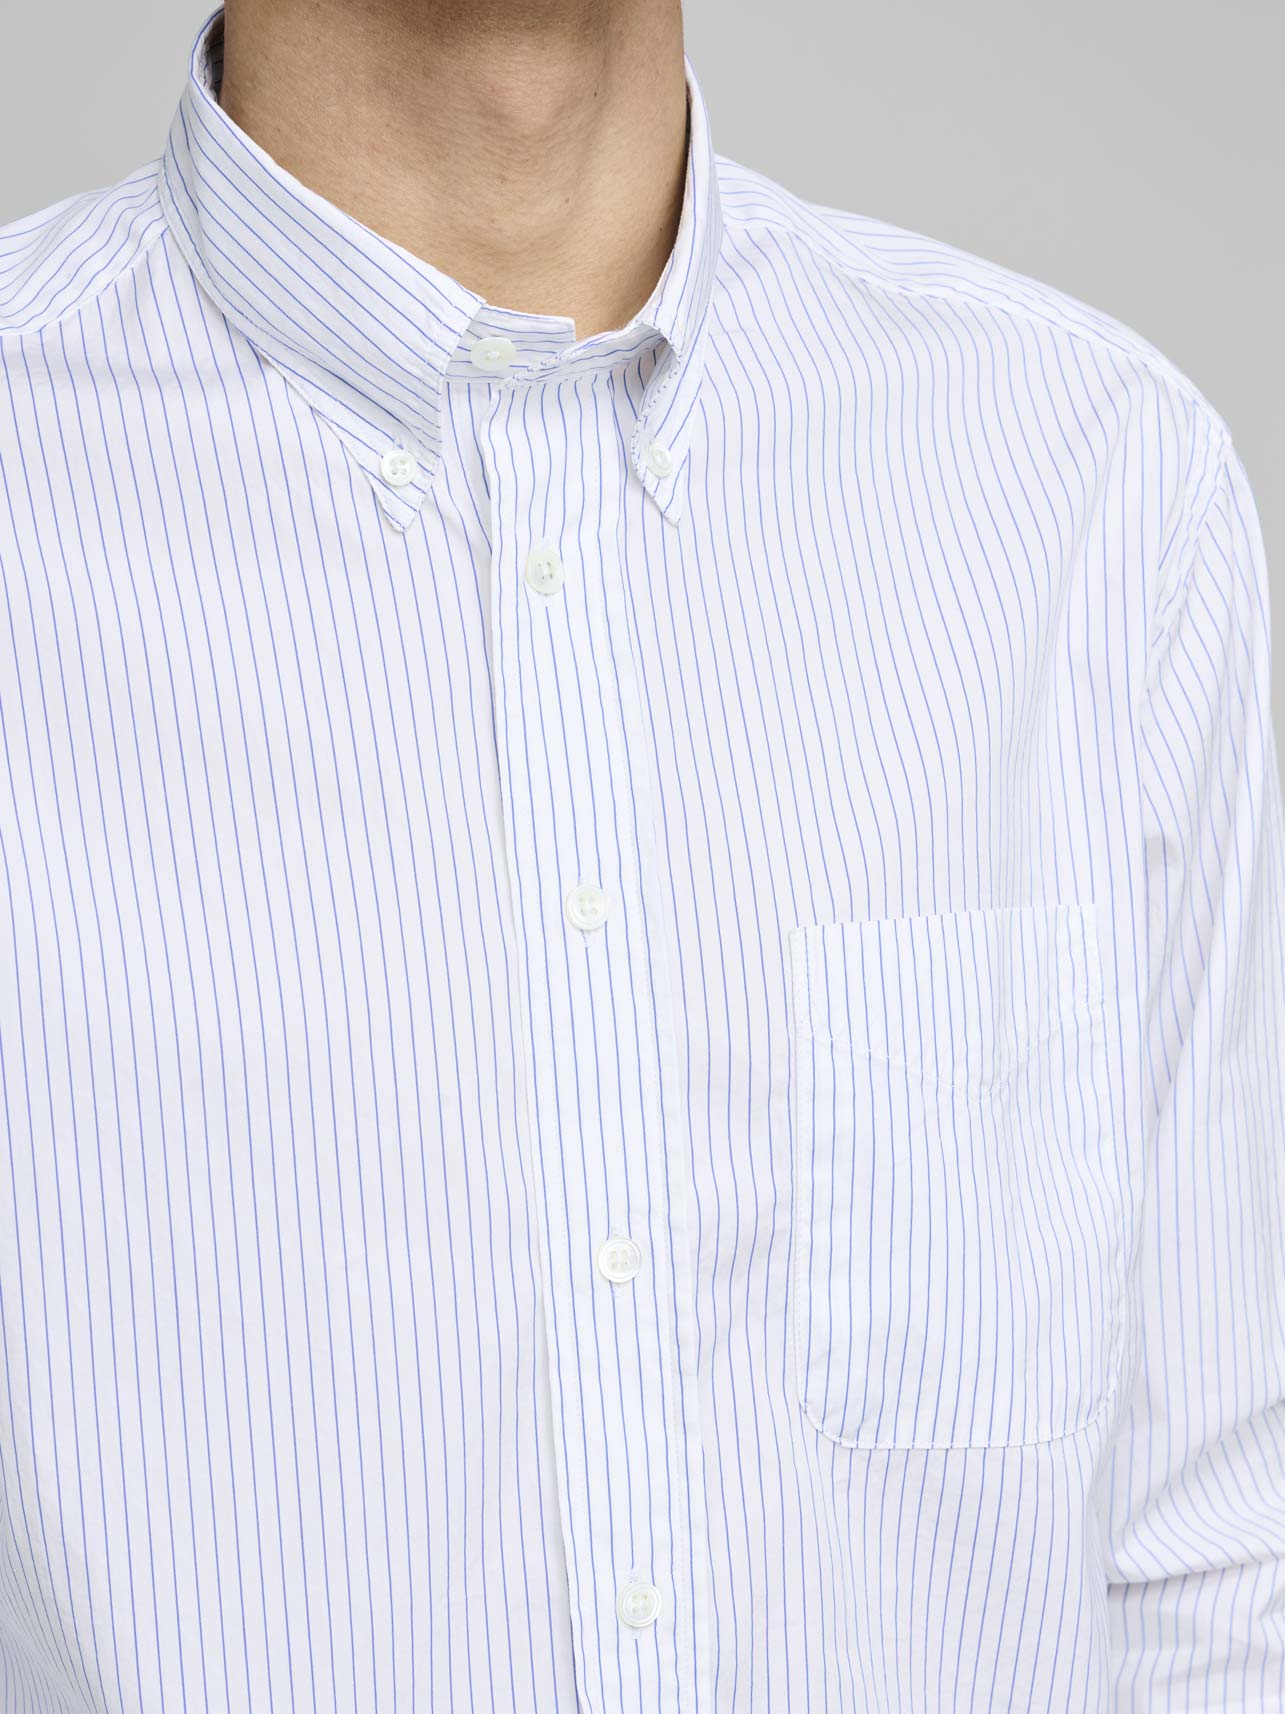 American BD Shirt, Dusty White & Fine Blue Stripe